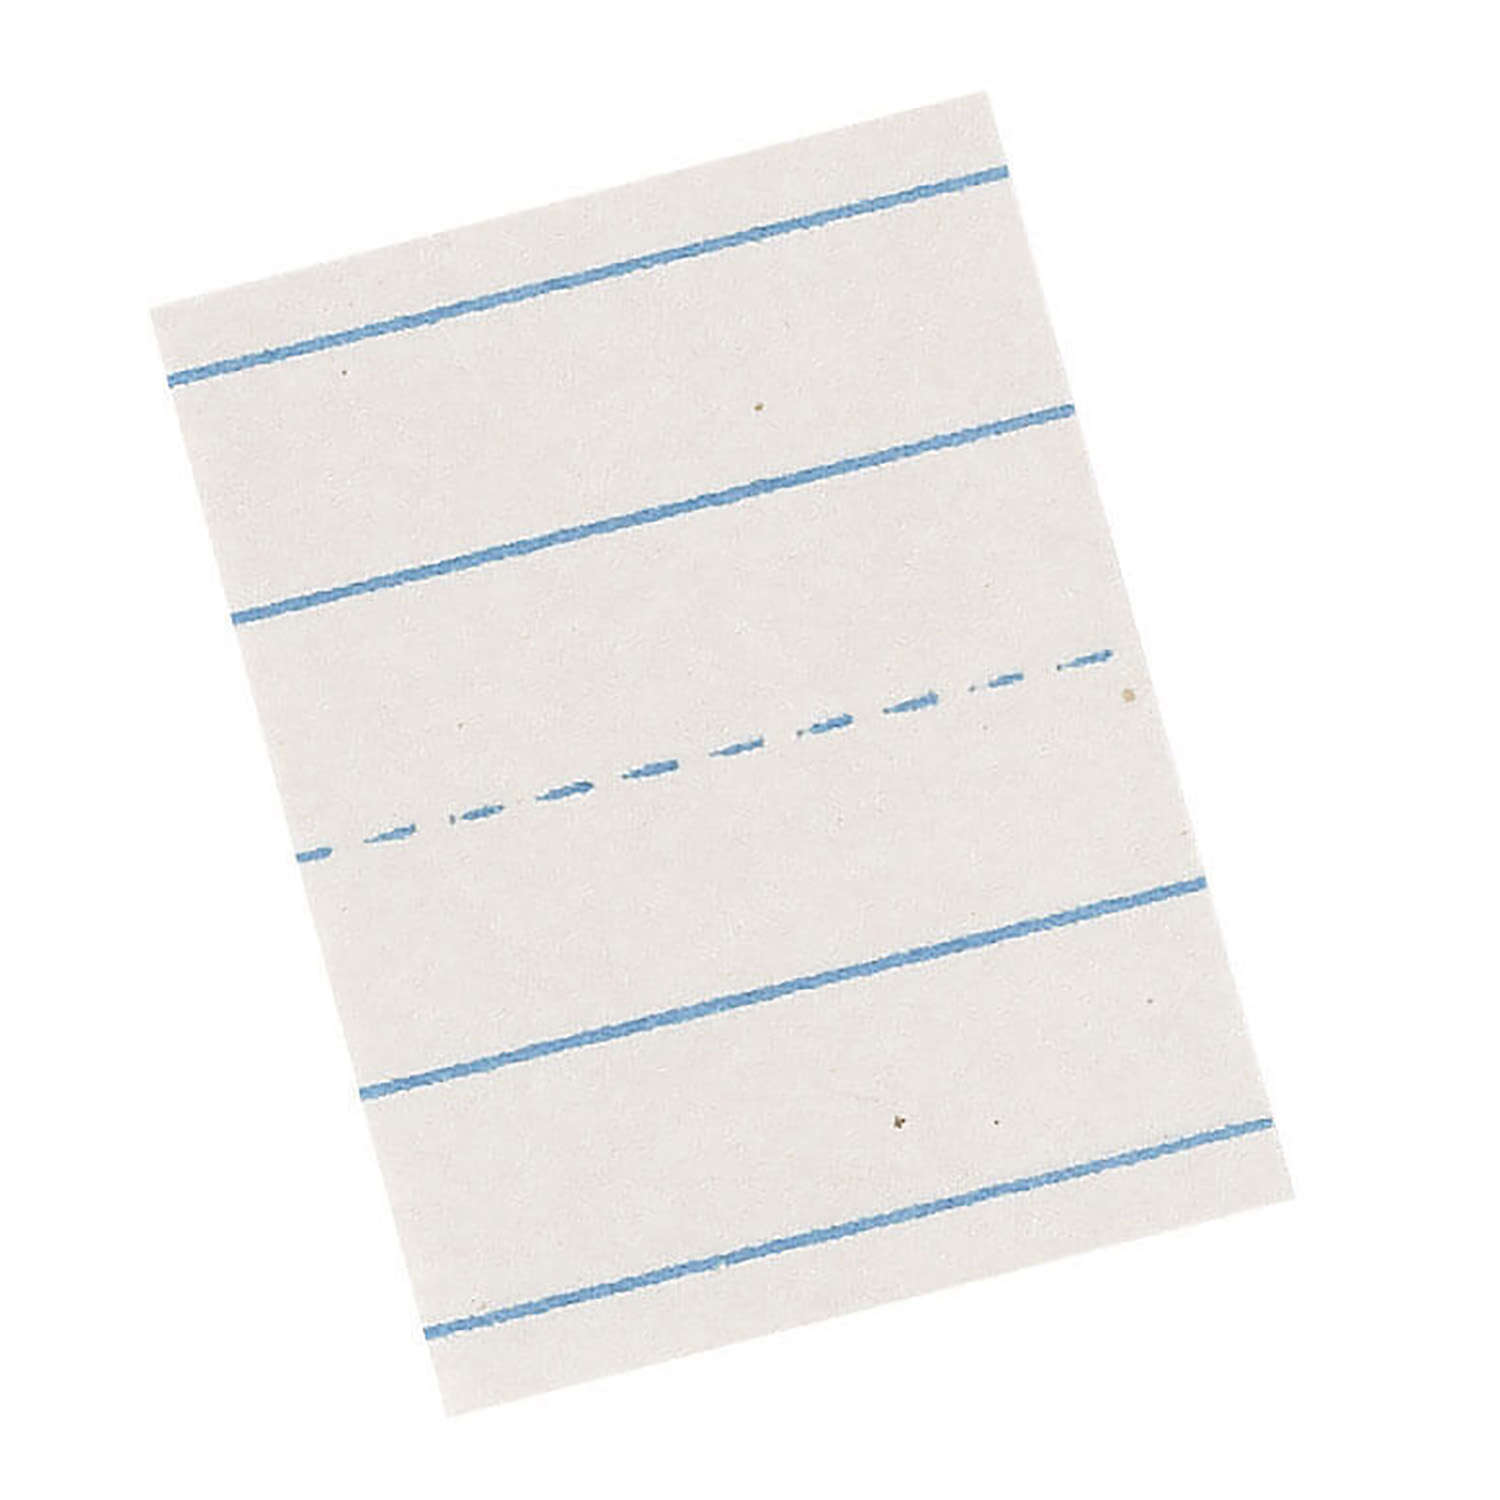 Newsprint Pad, White, 9 x 12, 50 Sheets - PAC3440, Dixon Ticonderoga Co  - Pacon